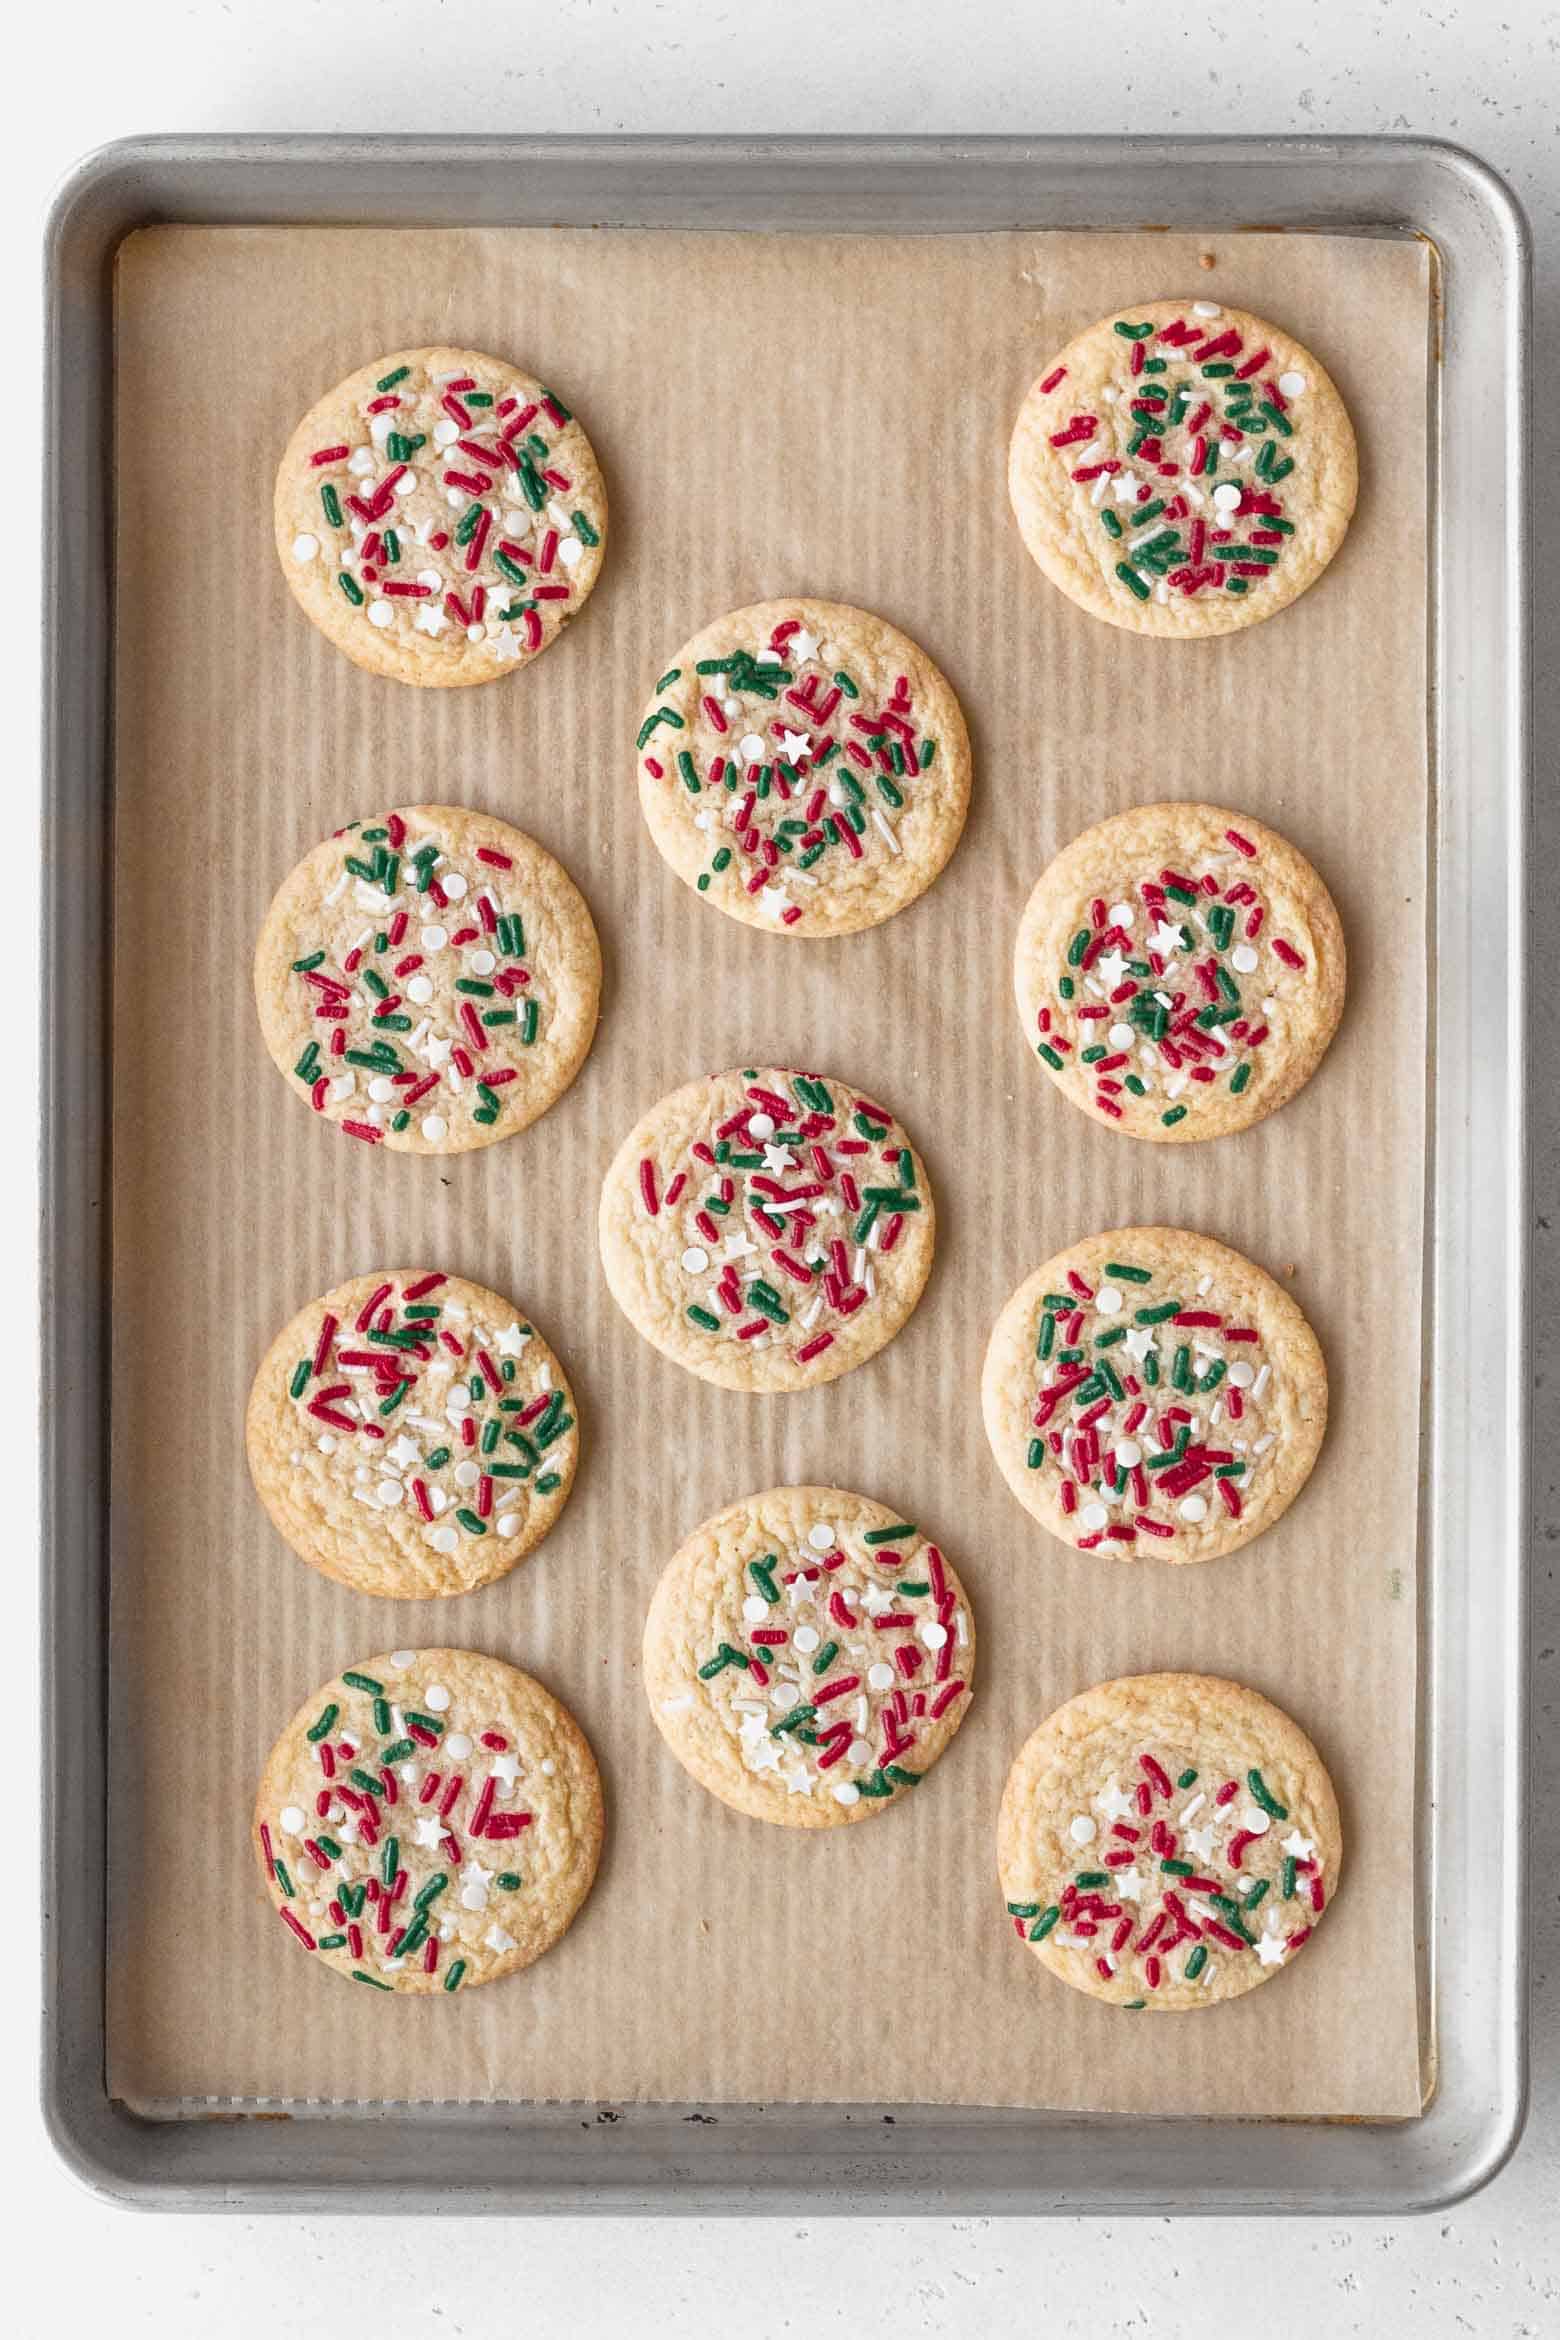 https://www.aimadeitforyou.com/wp-content/uploads/2022/08/Gluten-free-Christmas-cookies-7.jpg